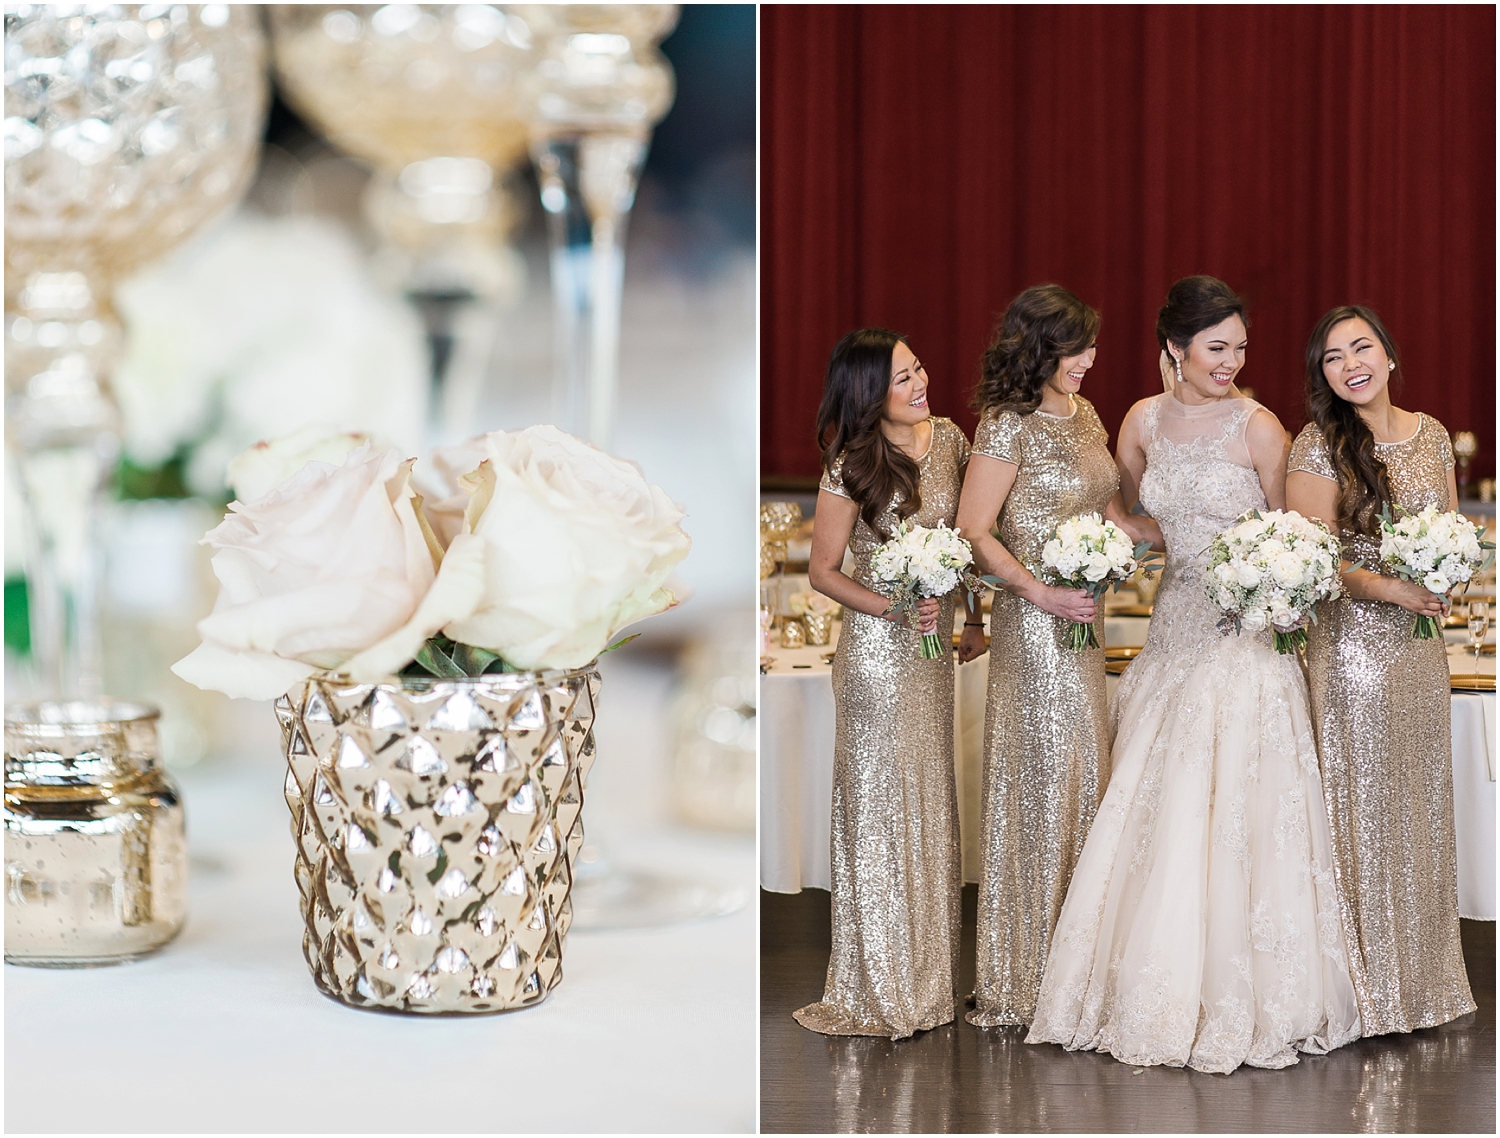 Mukilteo Rosehill Community Center Wedding. Winter Glitter Wedding. Blush, Champagne, Gold